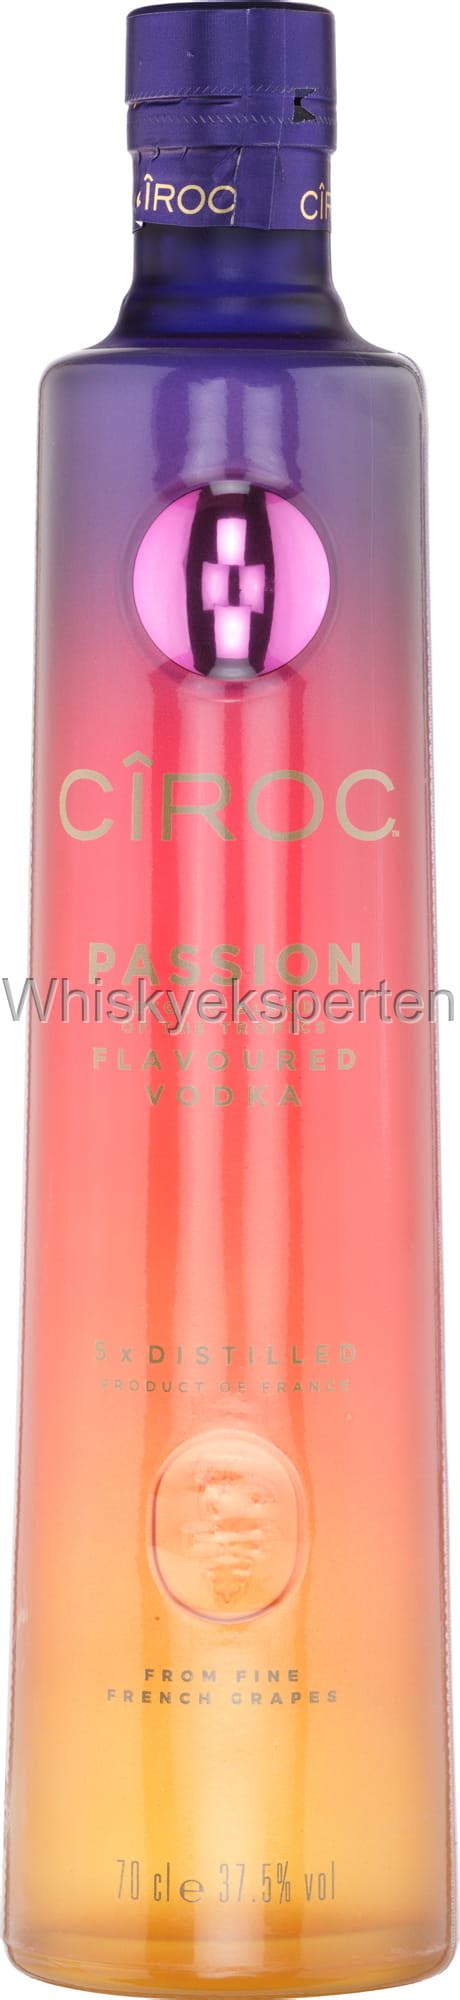 Cîroc Passion Vodka